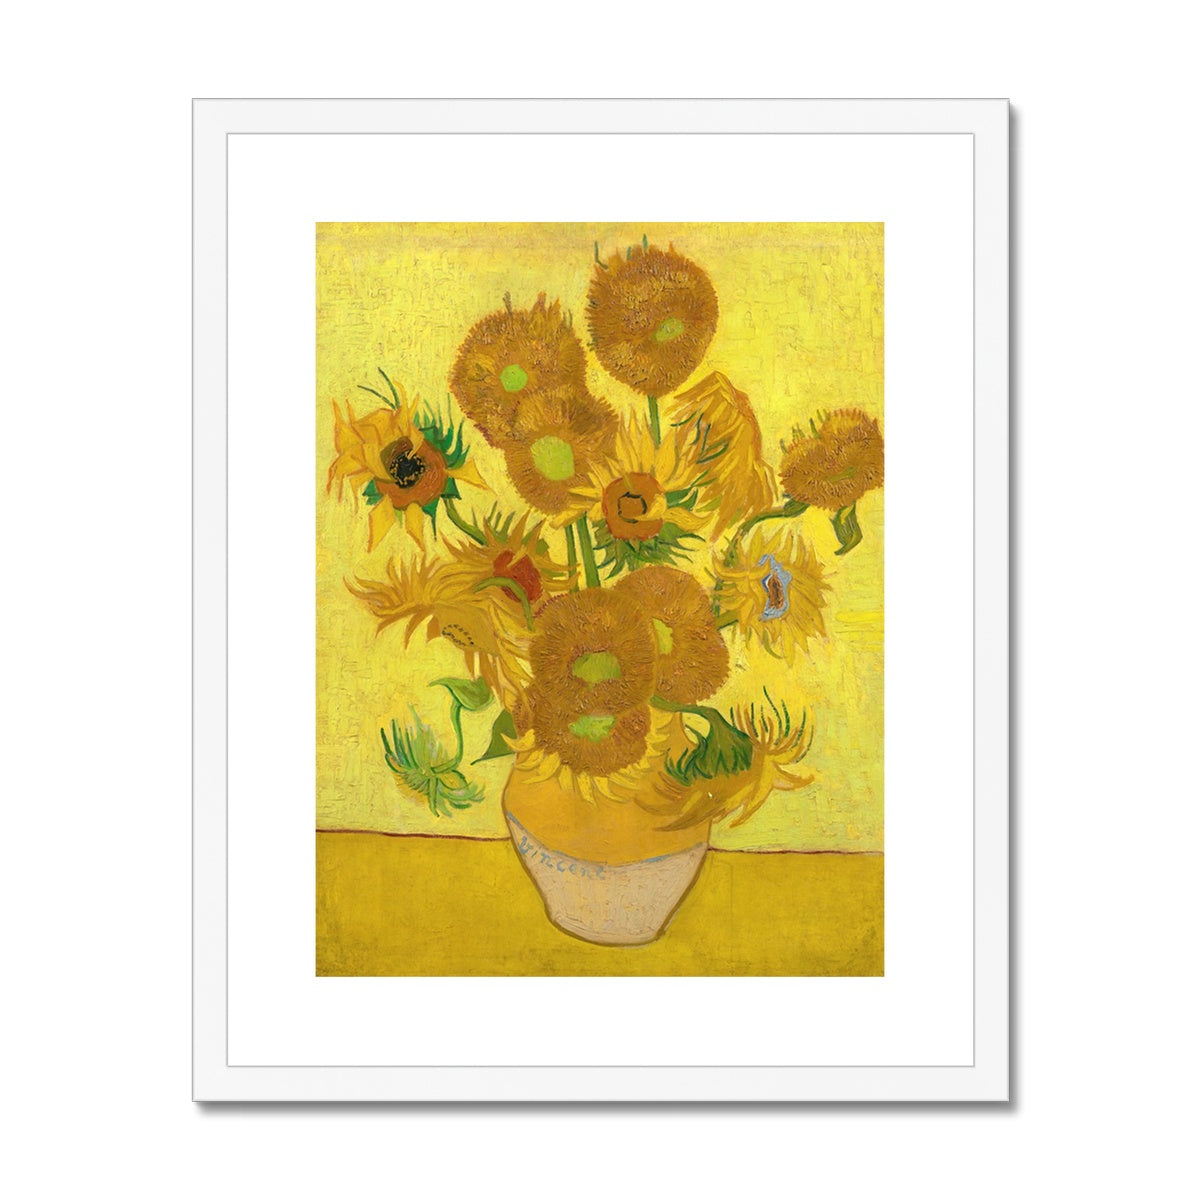 Vincent Van Gogh Framed Open Edition Art Print. &#39;Sunflowers&#39;. Art Gallery Historic Art